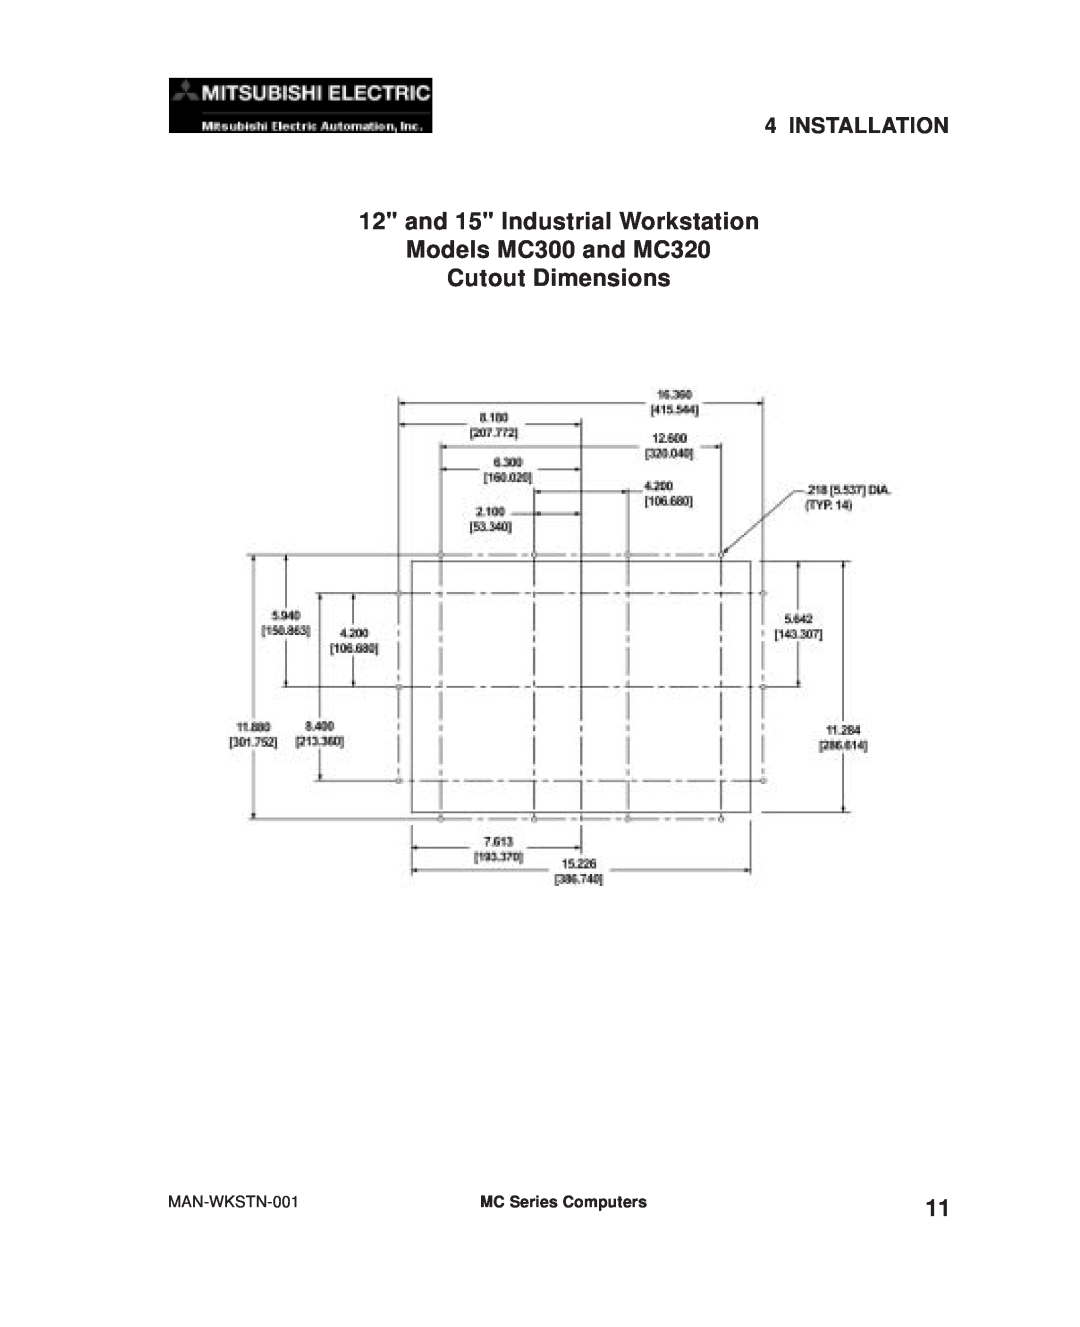 Mitsubishi Electronics manual Cutout Dimensions, Installation, and 15 Industrial Workstation Models MC300 and MC320 